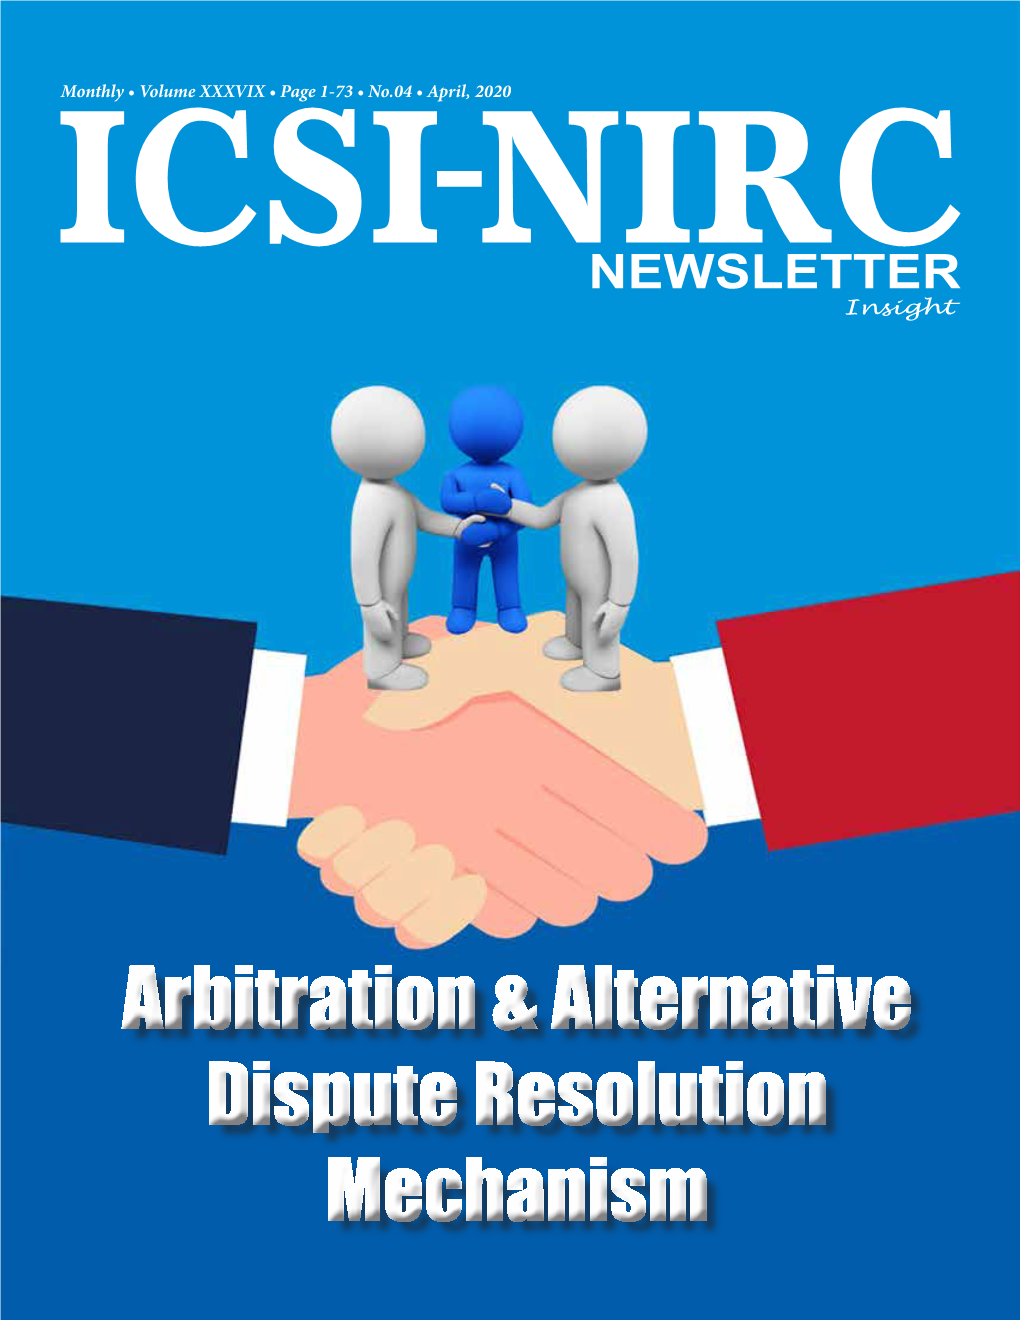 Arbitration & Alternative Dispute Resolution Mechanism